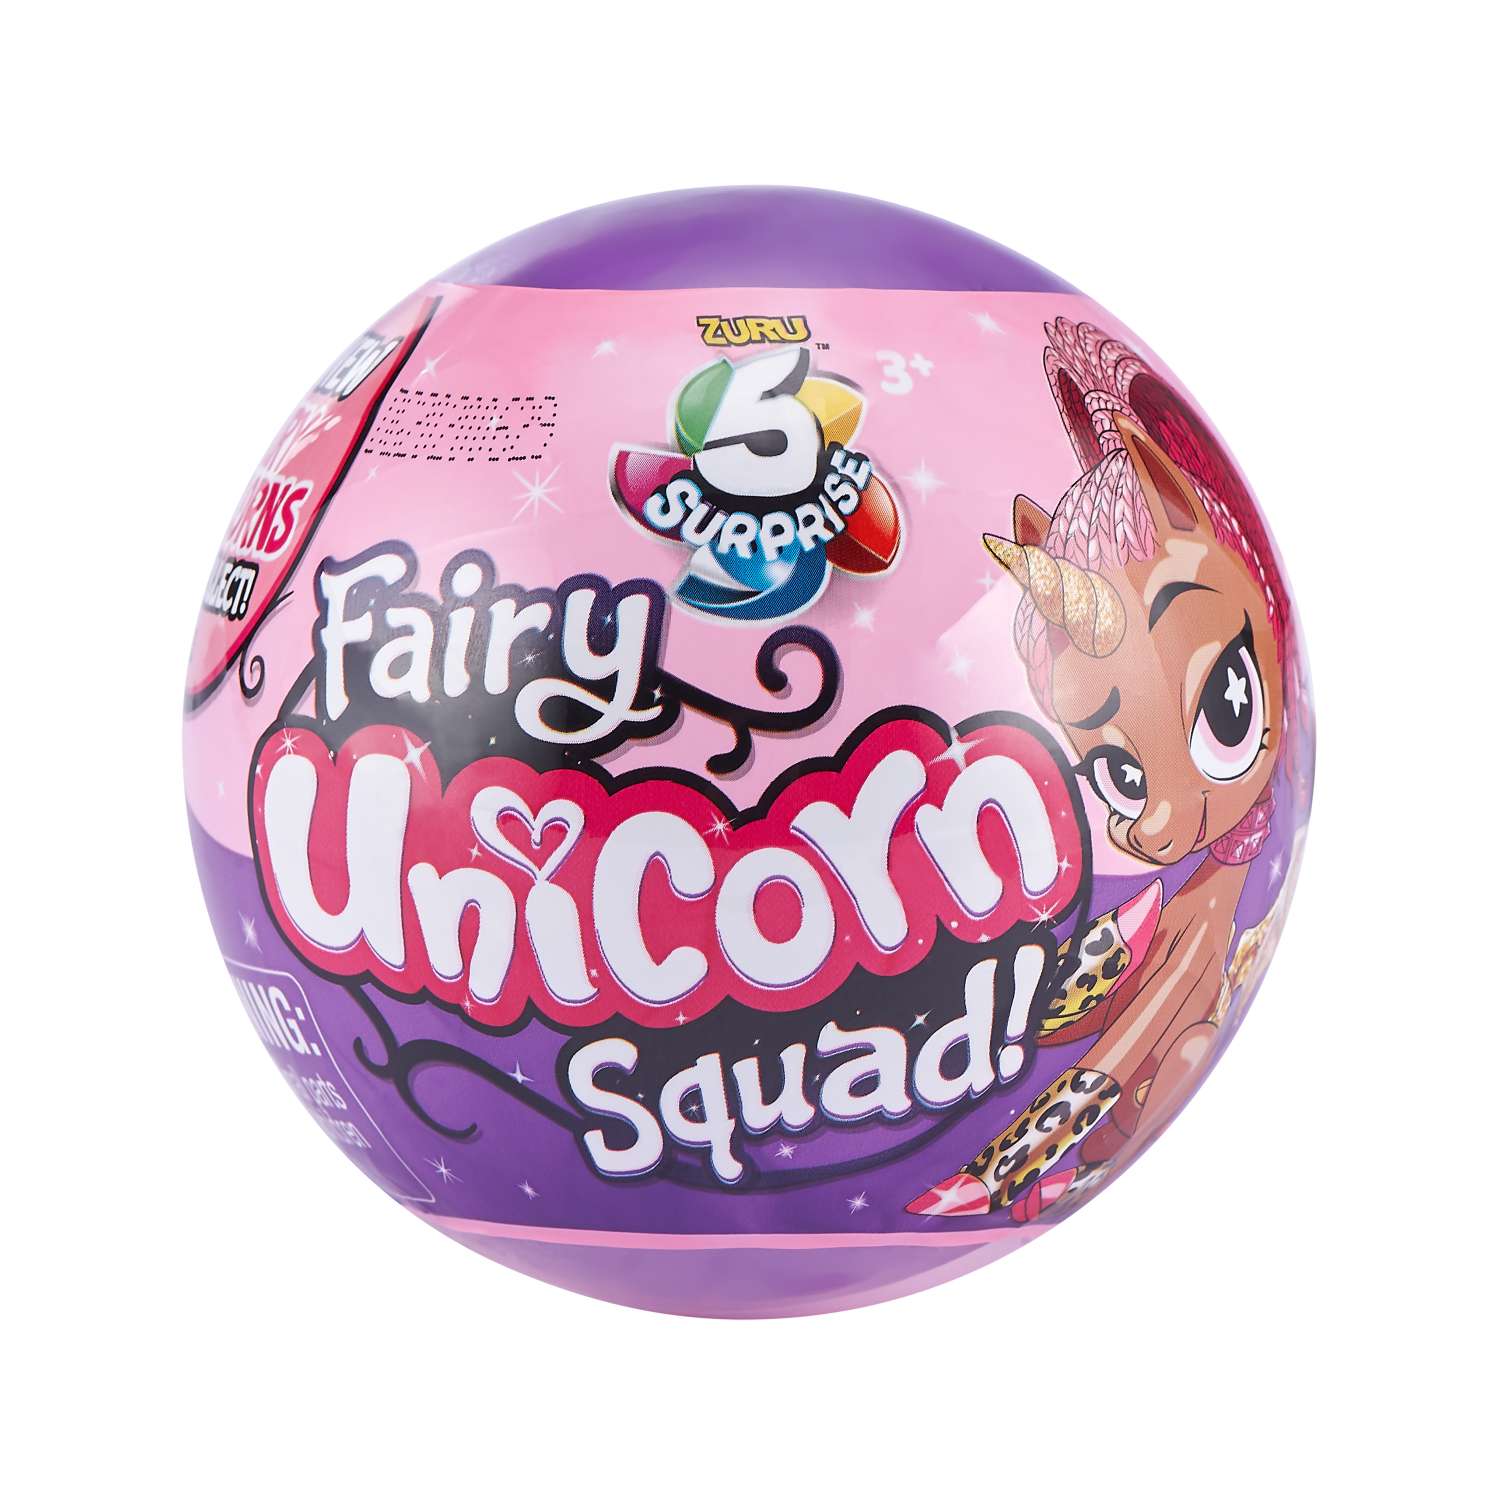 Игрушка Zuru 5 surprise Unicorn squad S2 Шар в непрозрачной упаковке (Сюрприз) 7768SQ1 - фото 1